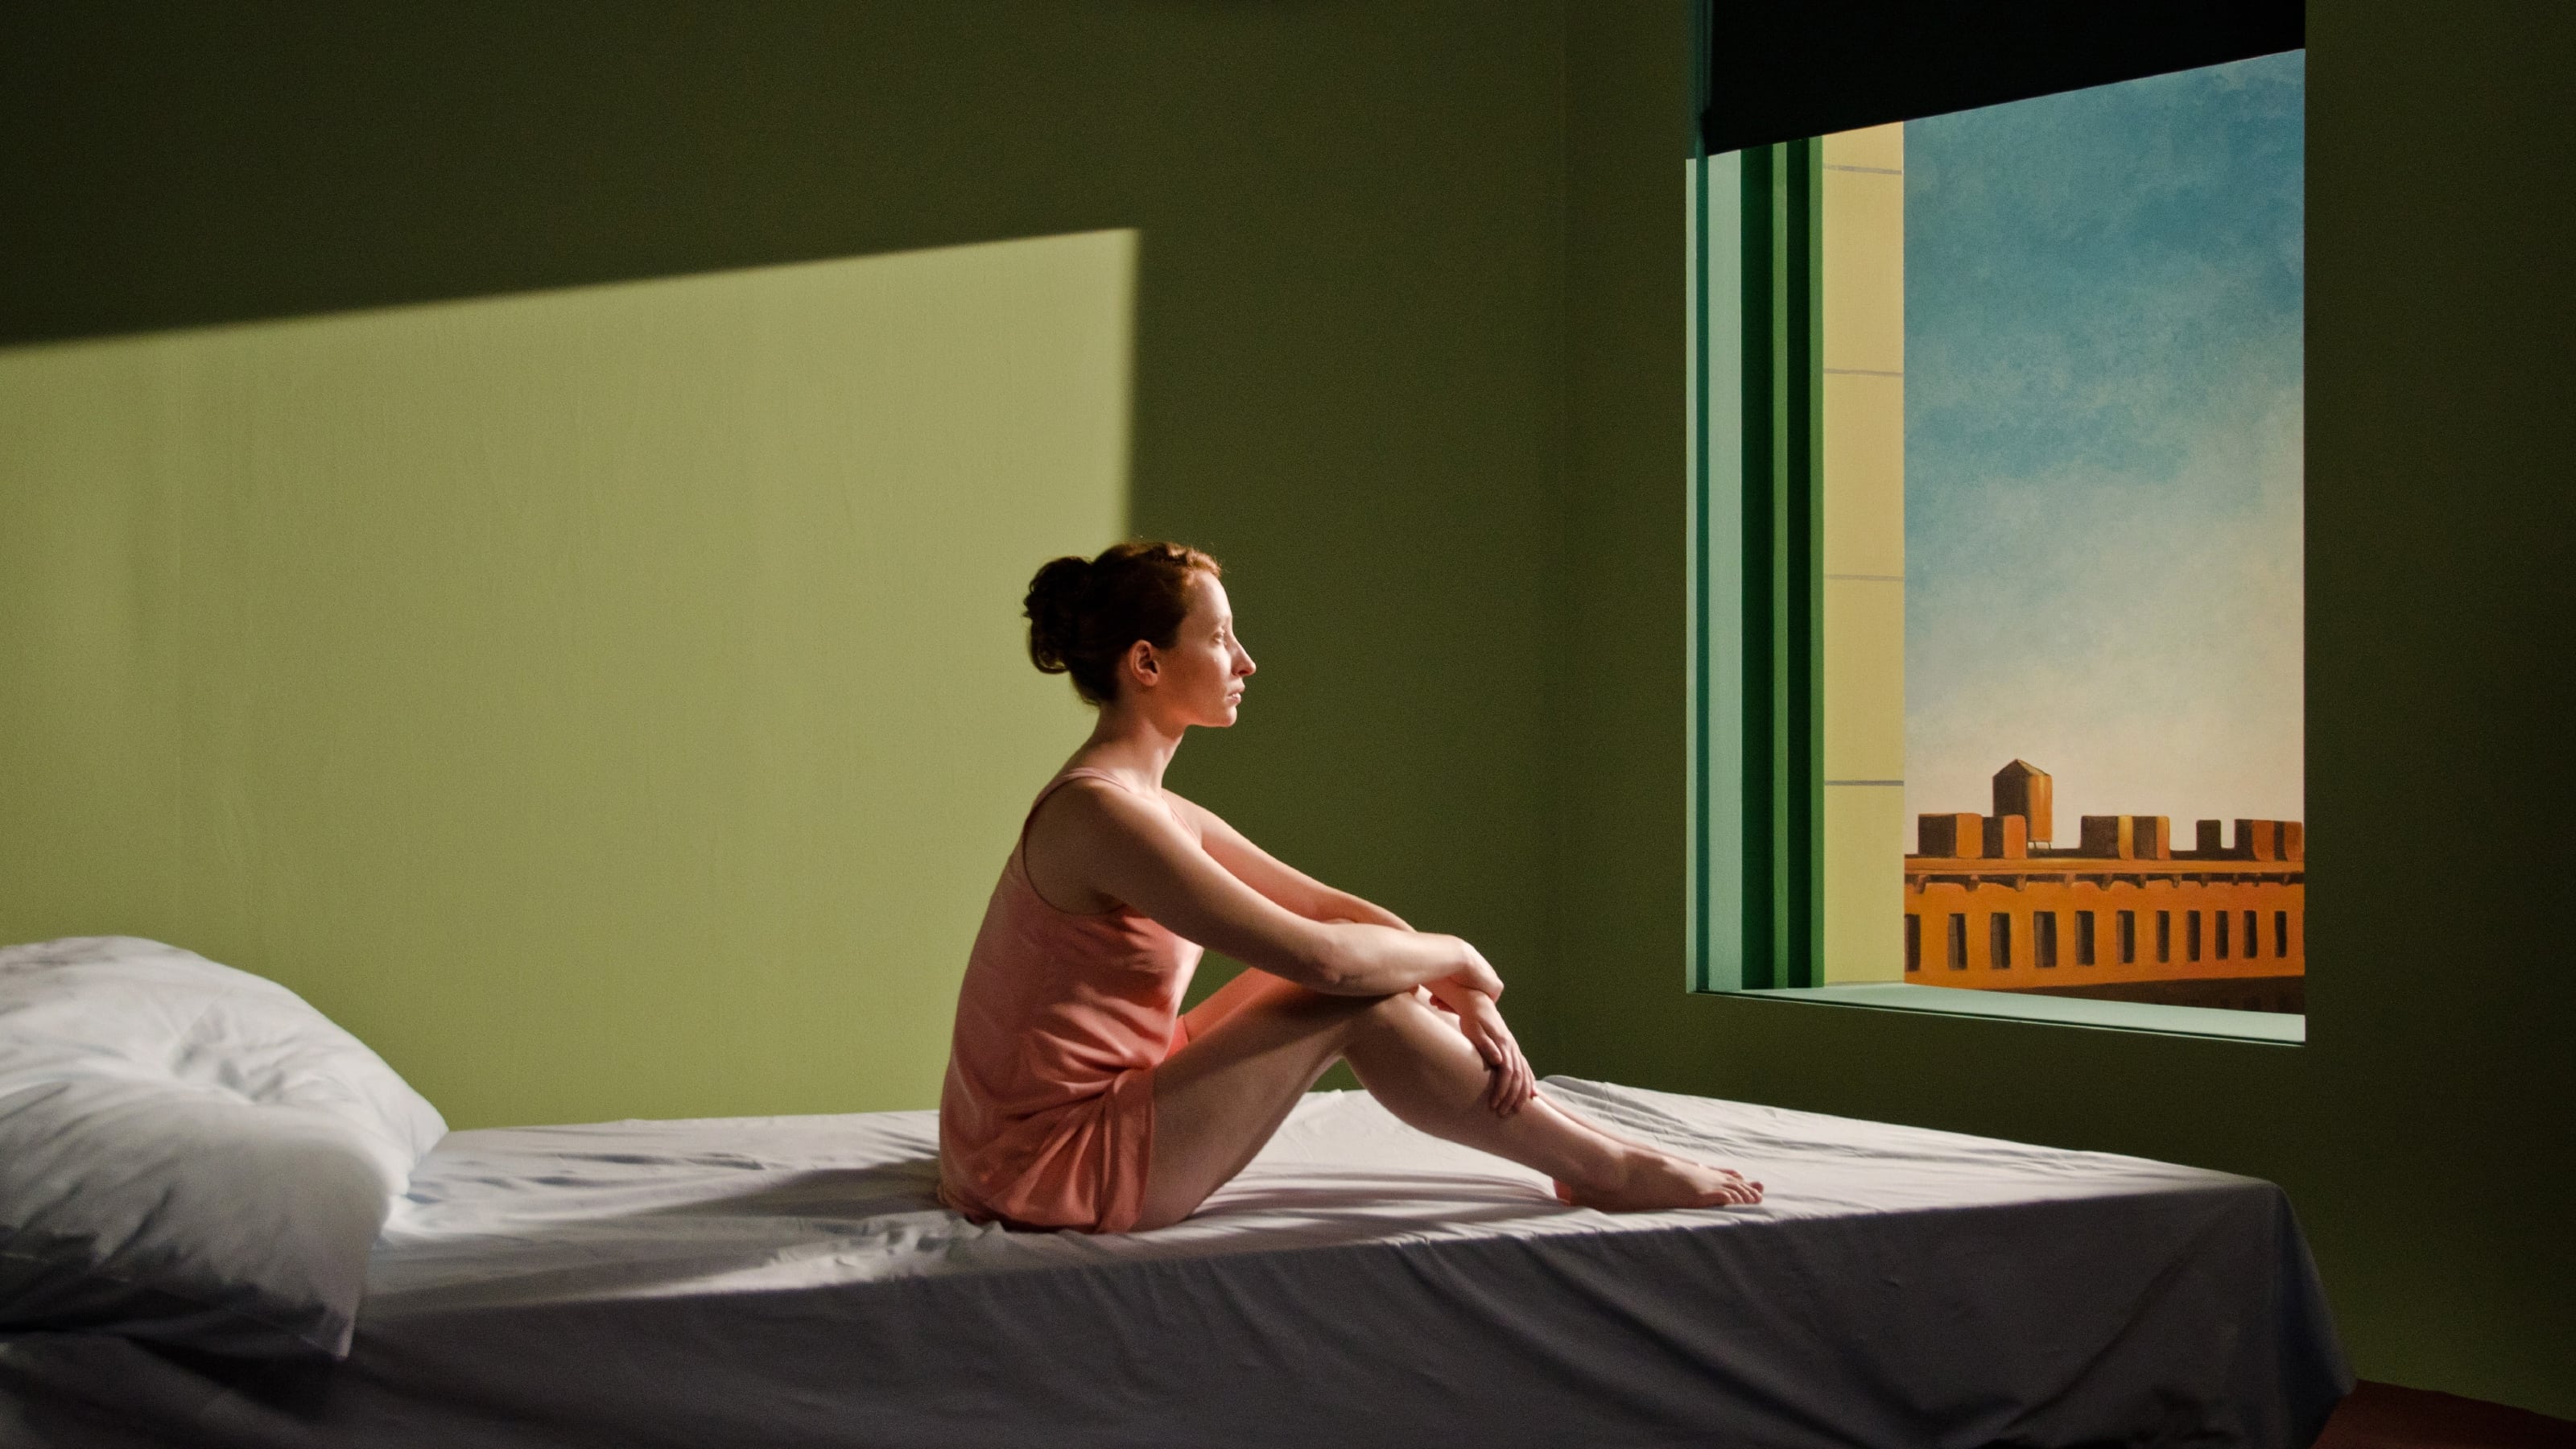 Image du film Shirley : un voyage dans la peinture d'Edward Hopper nihnvu54fne93nxkyodkl1cnarpjpg